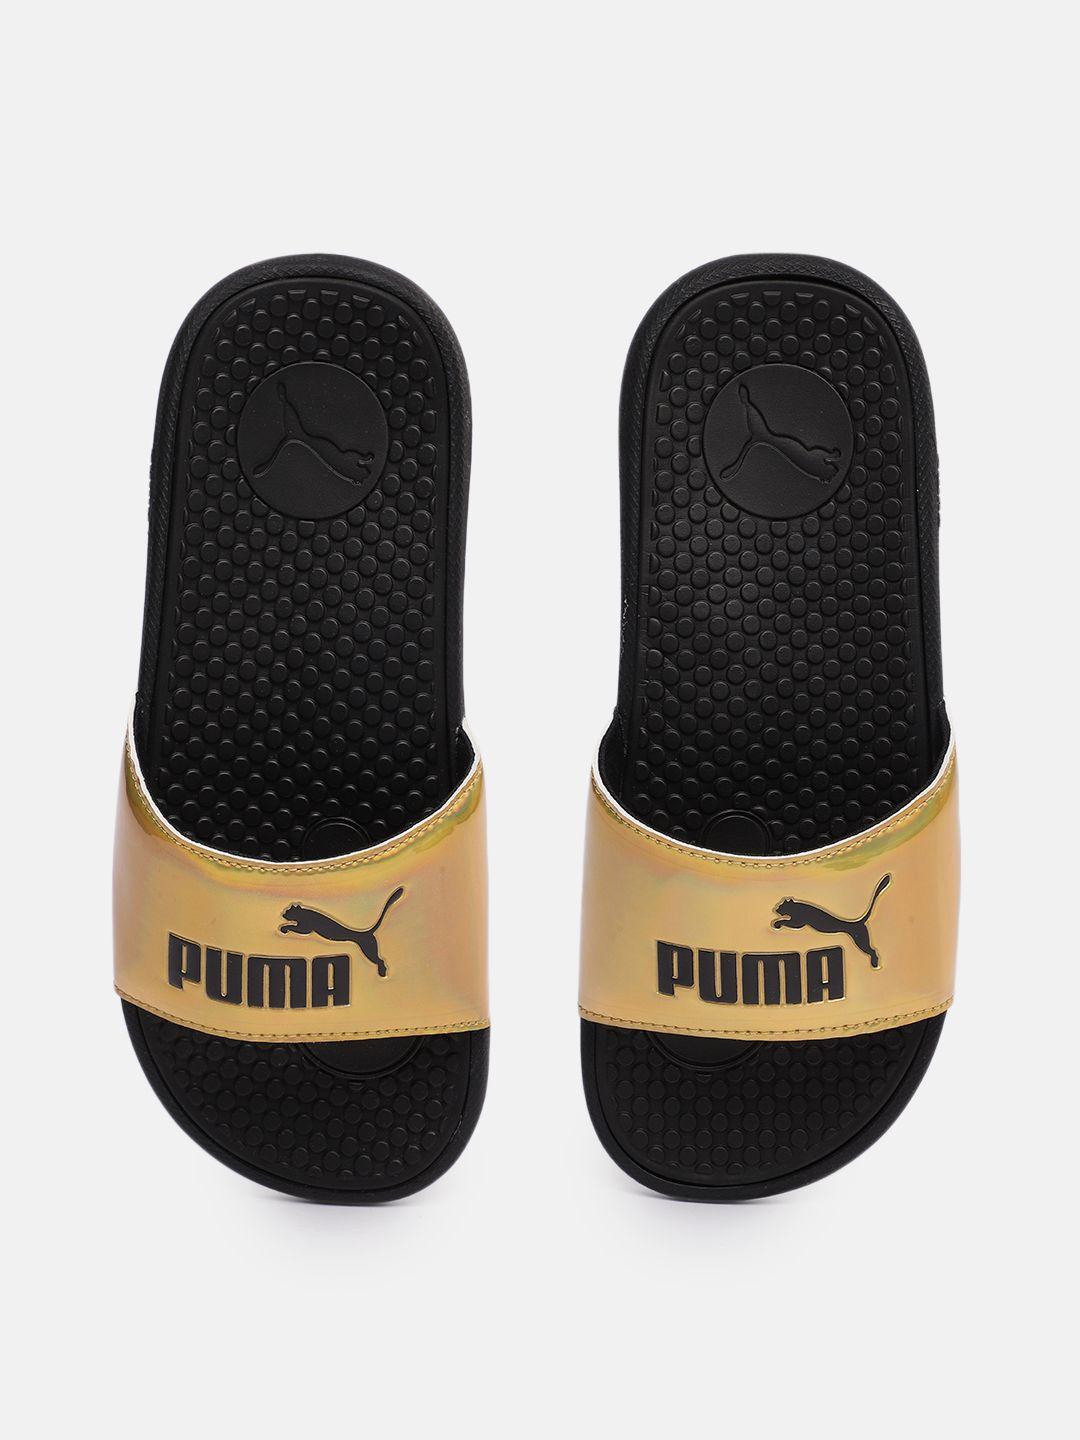 puma women gold-toned brand logo cool cat distressed sliders